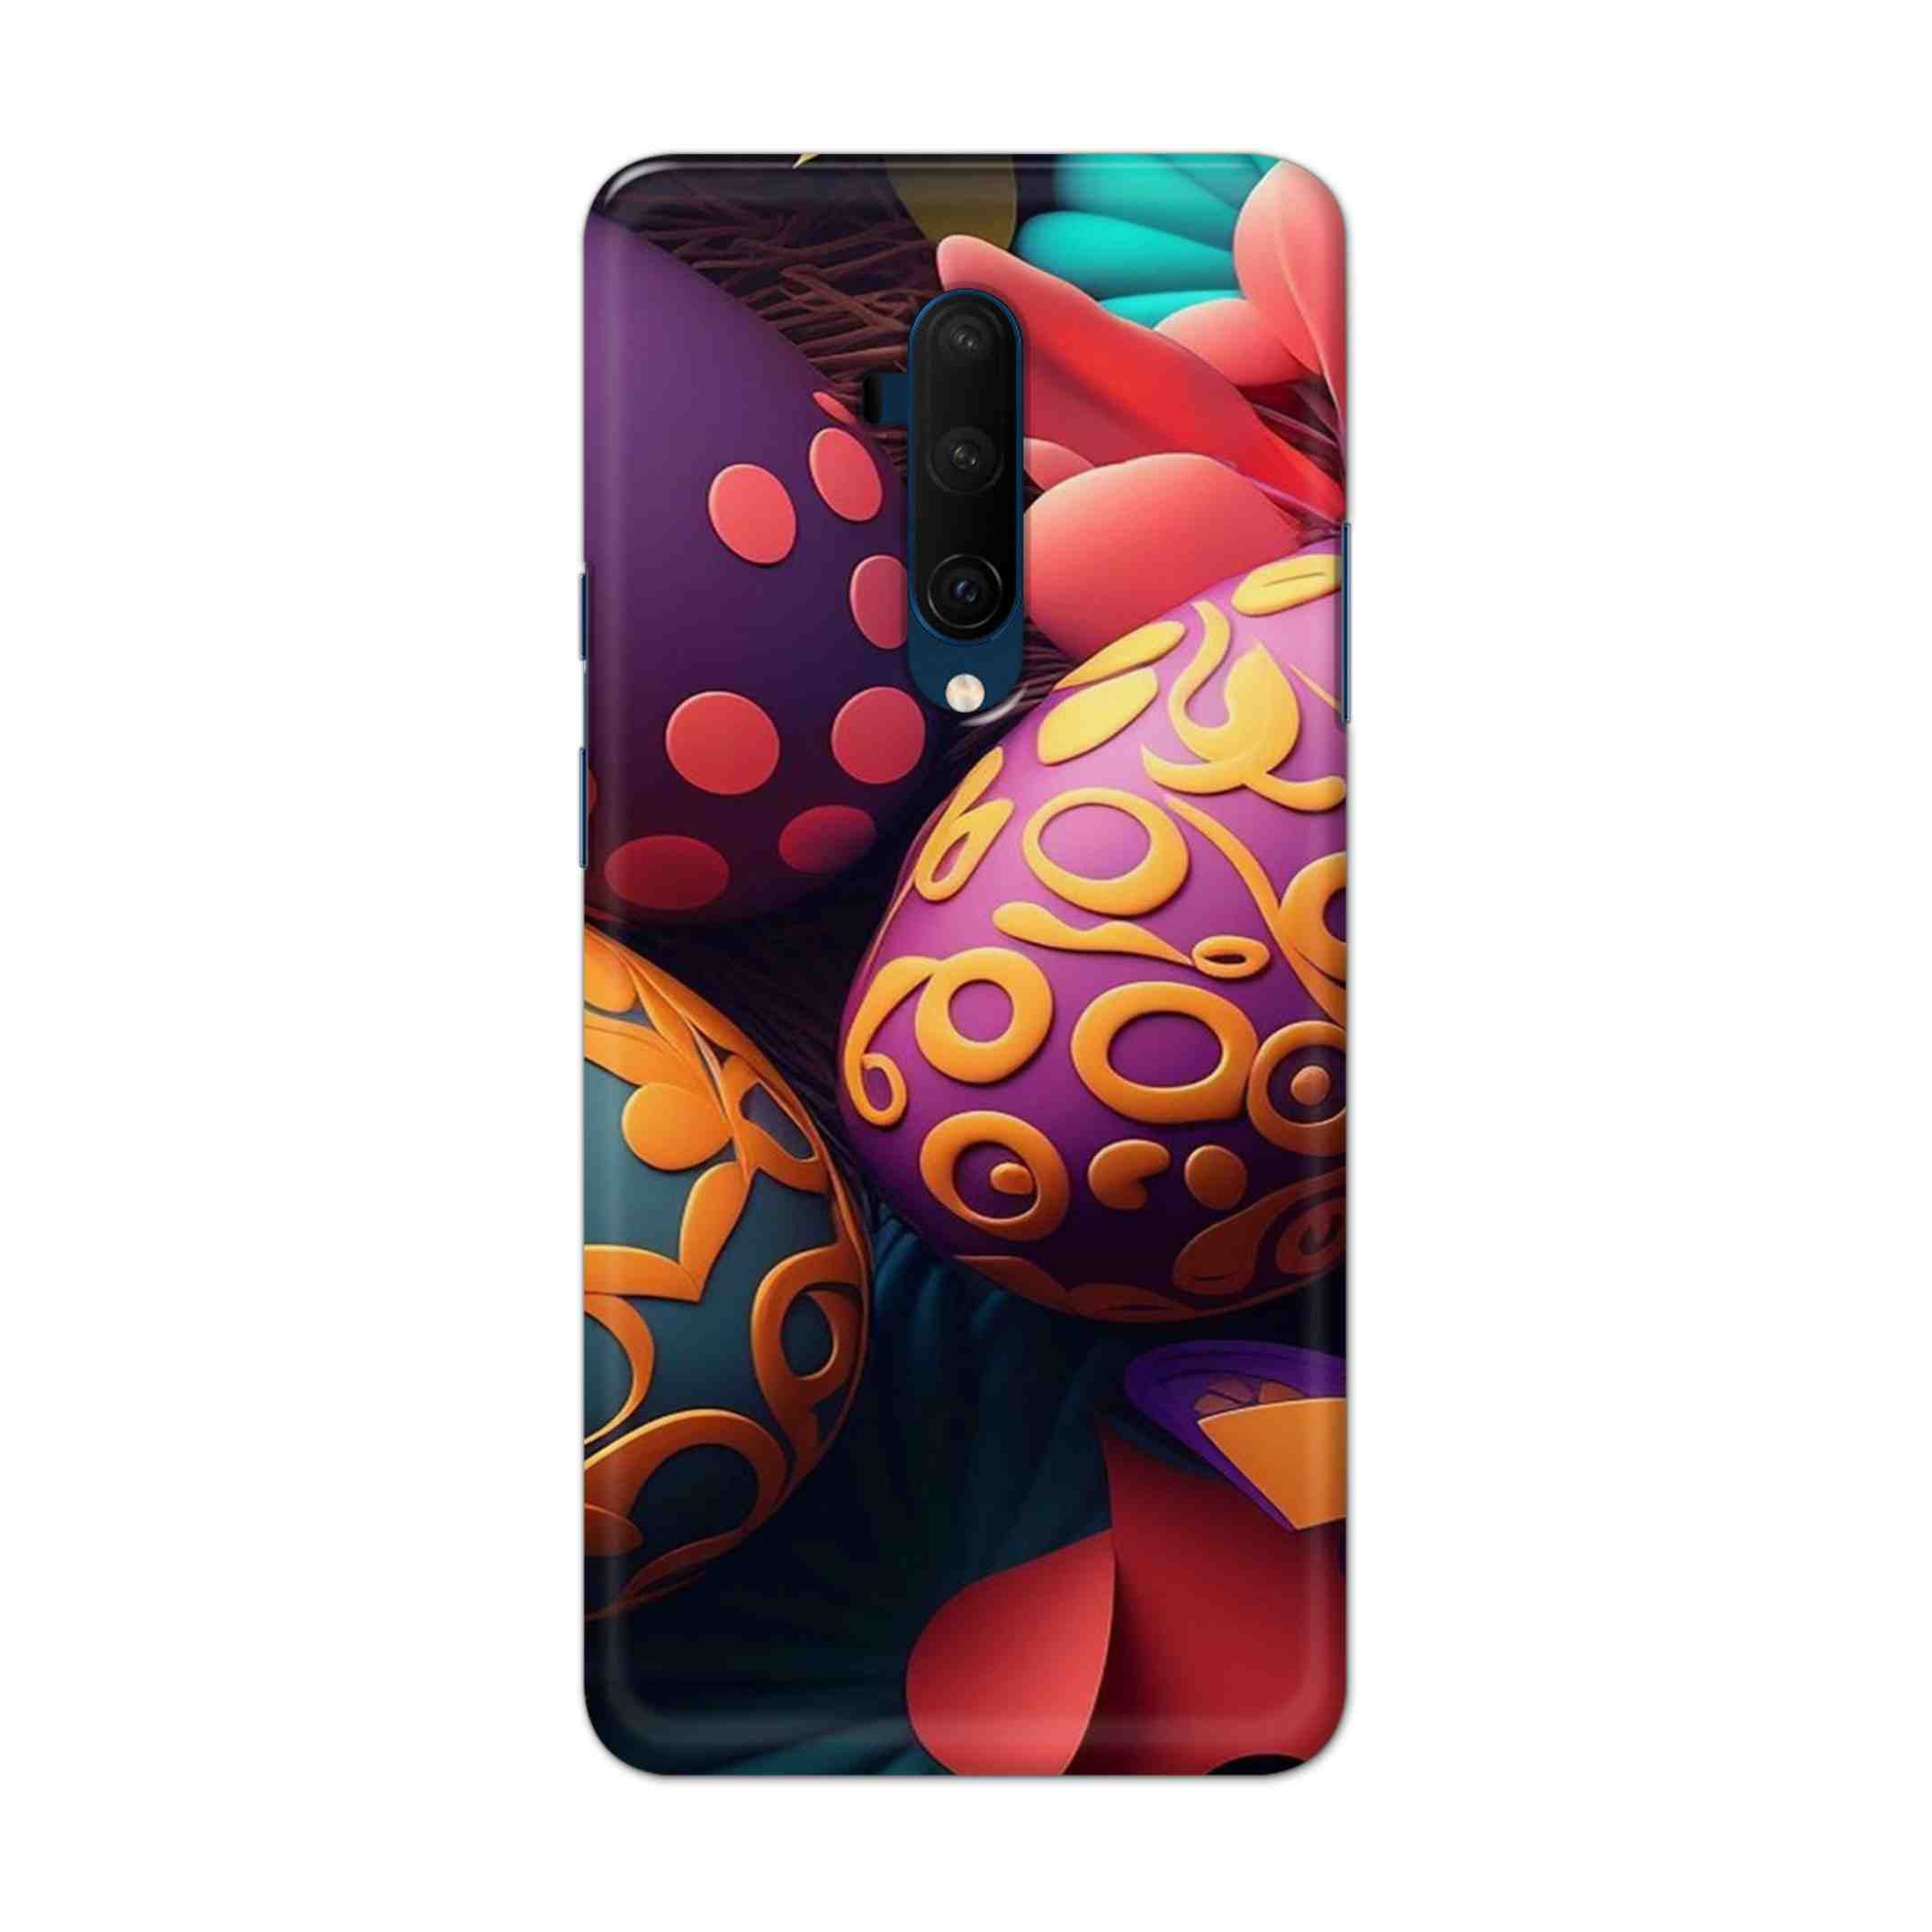 Buy Easter Egg Hard Back Mobile Phone Case Cover For OnePlus 7T Pro Online